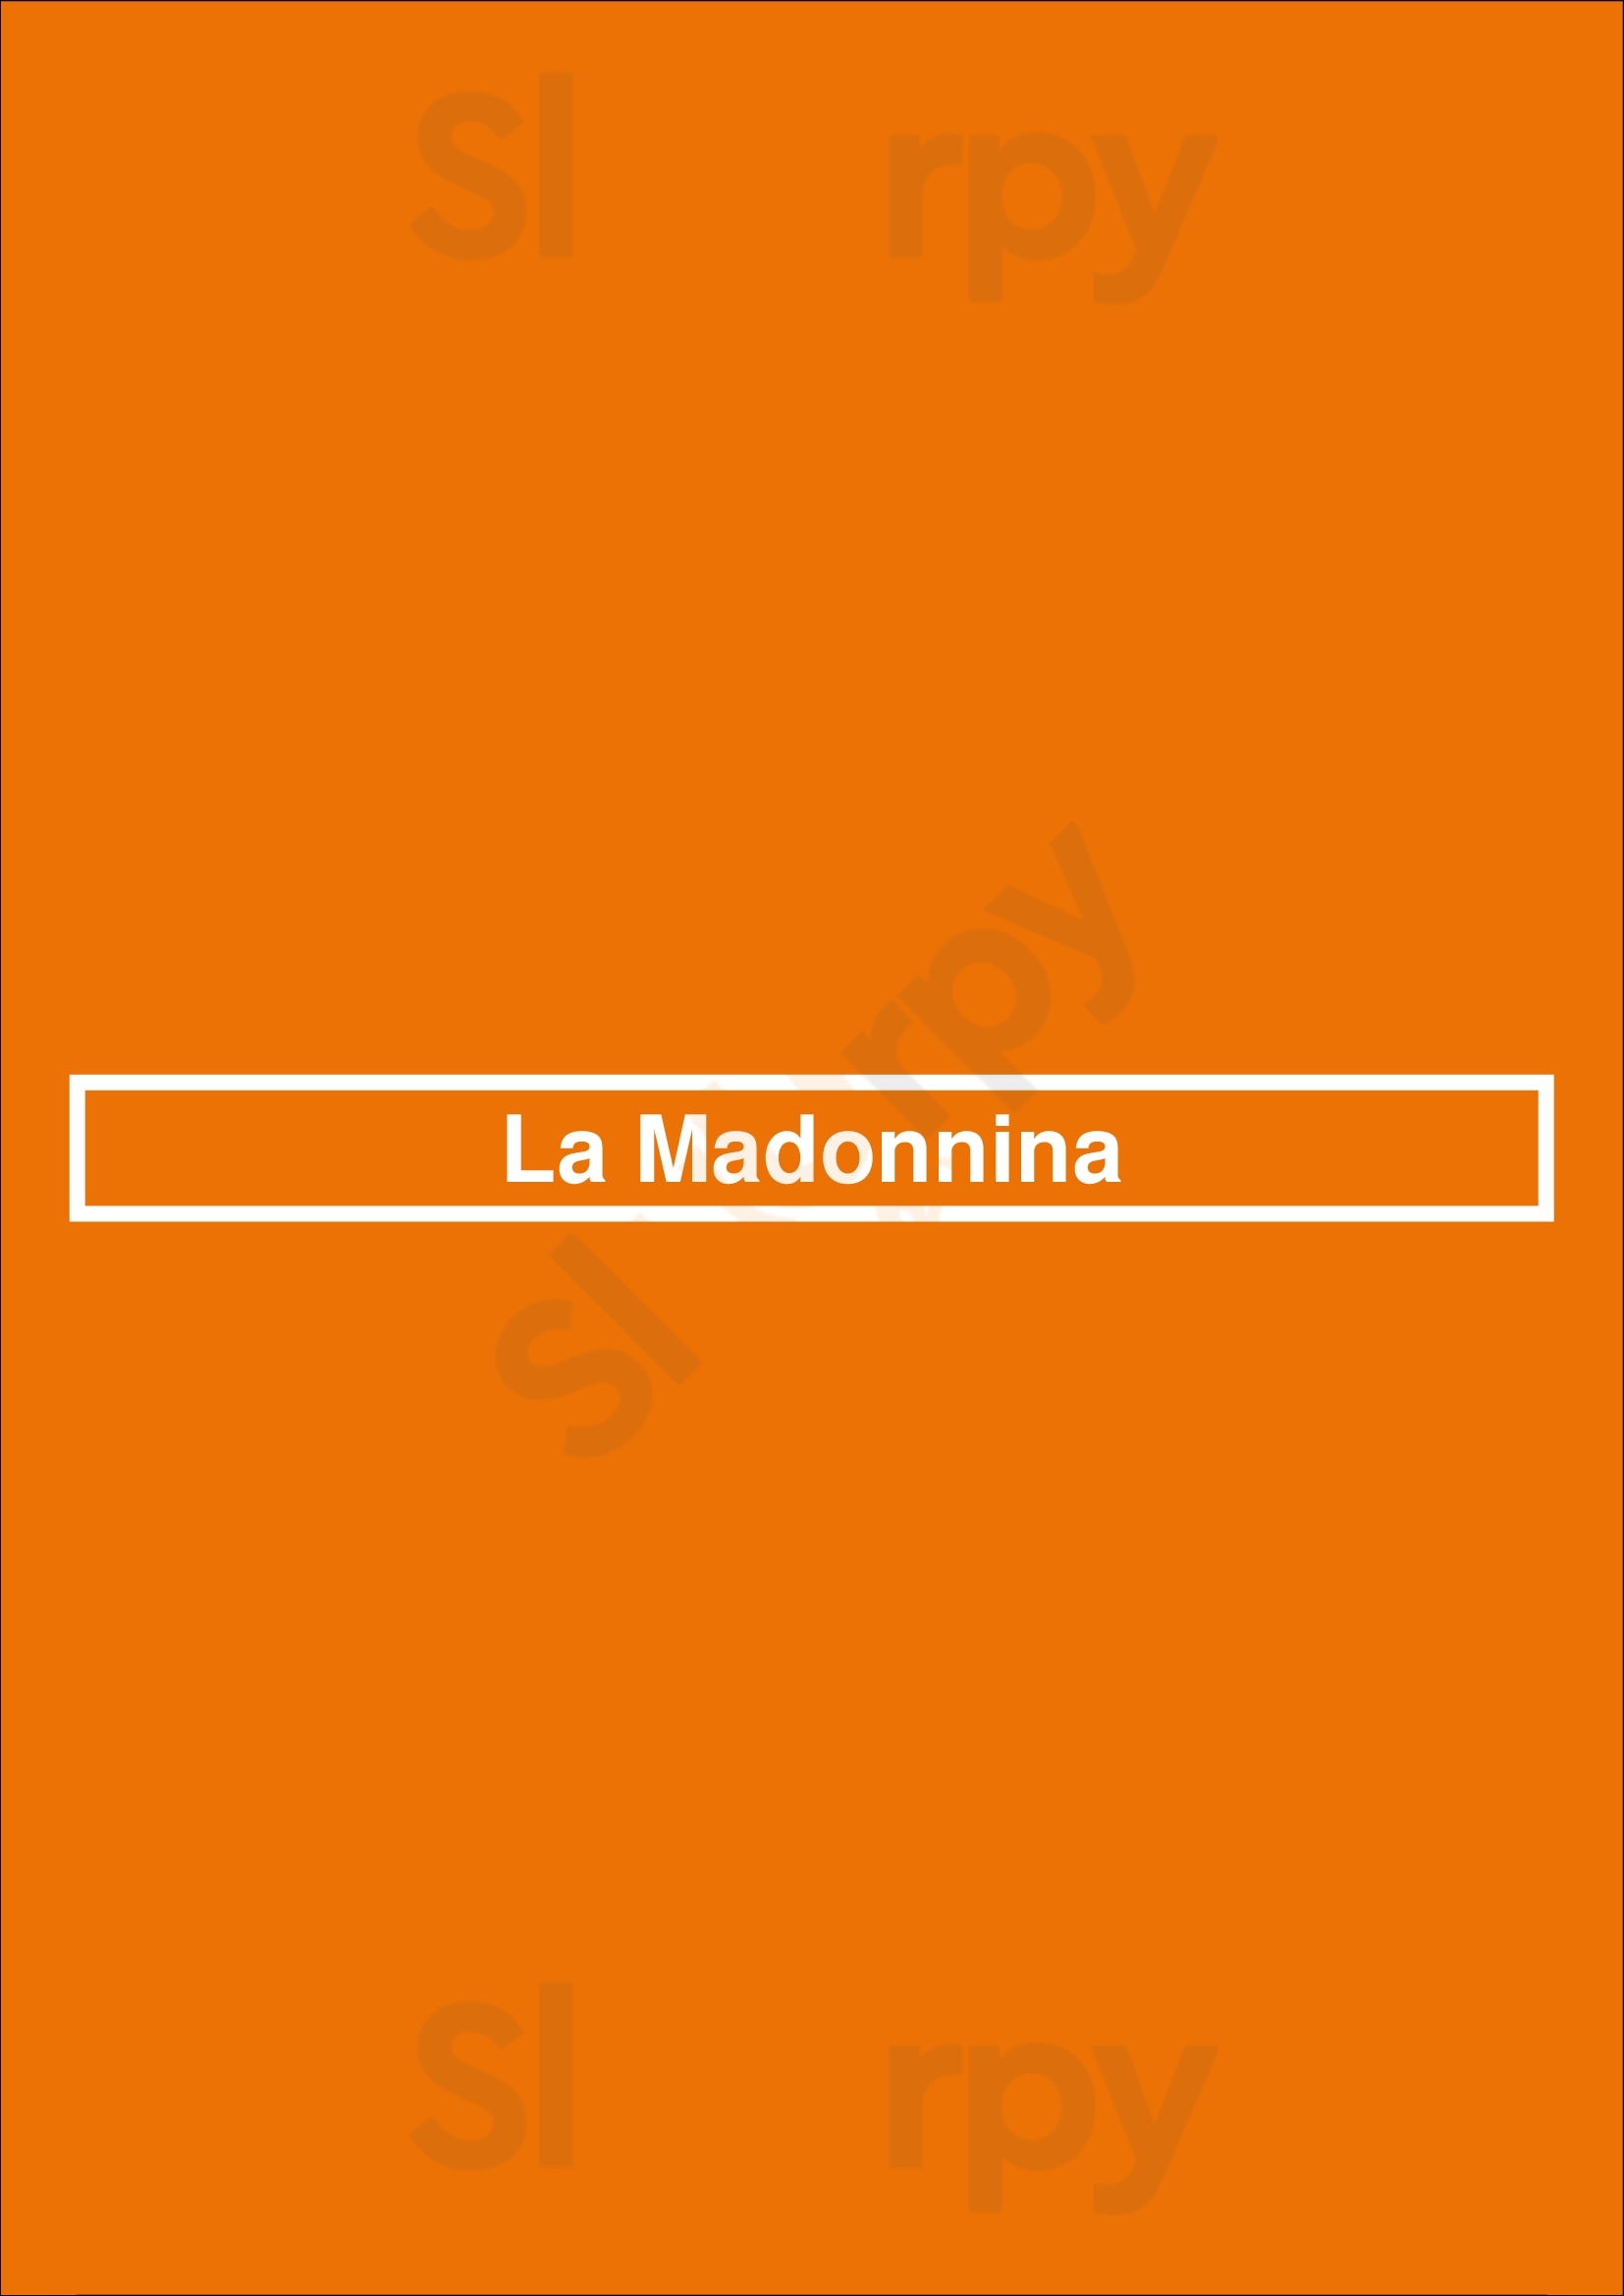 La Madonnina Buenos Aires Menu - 1